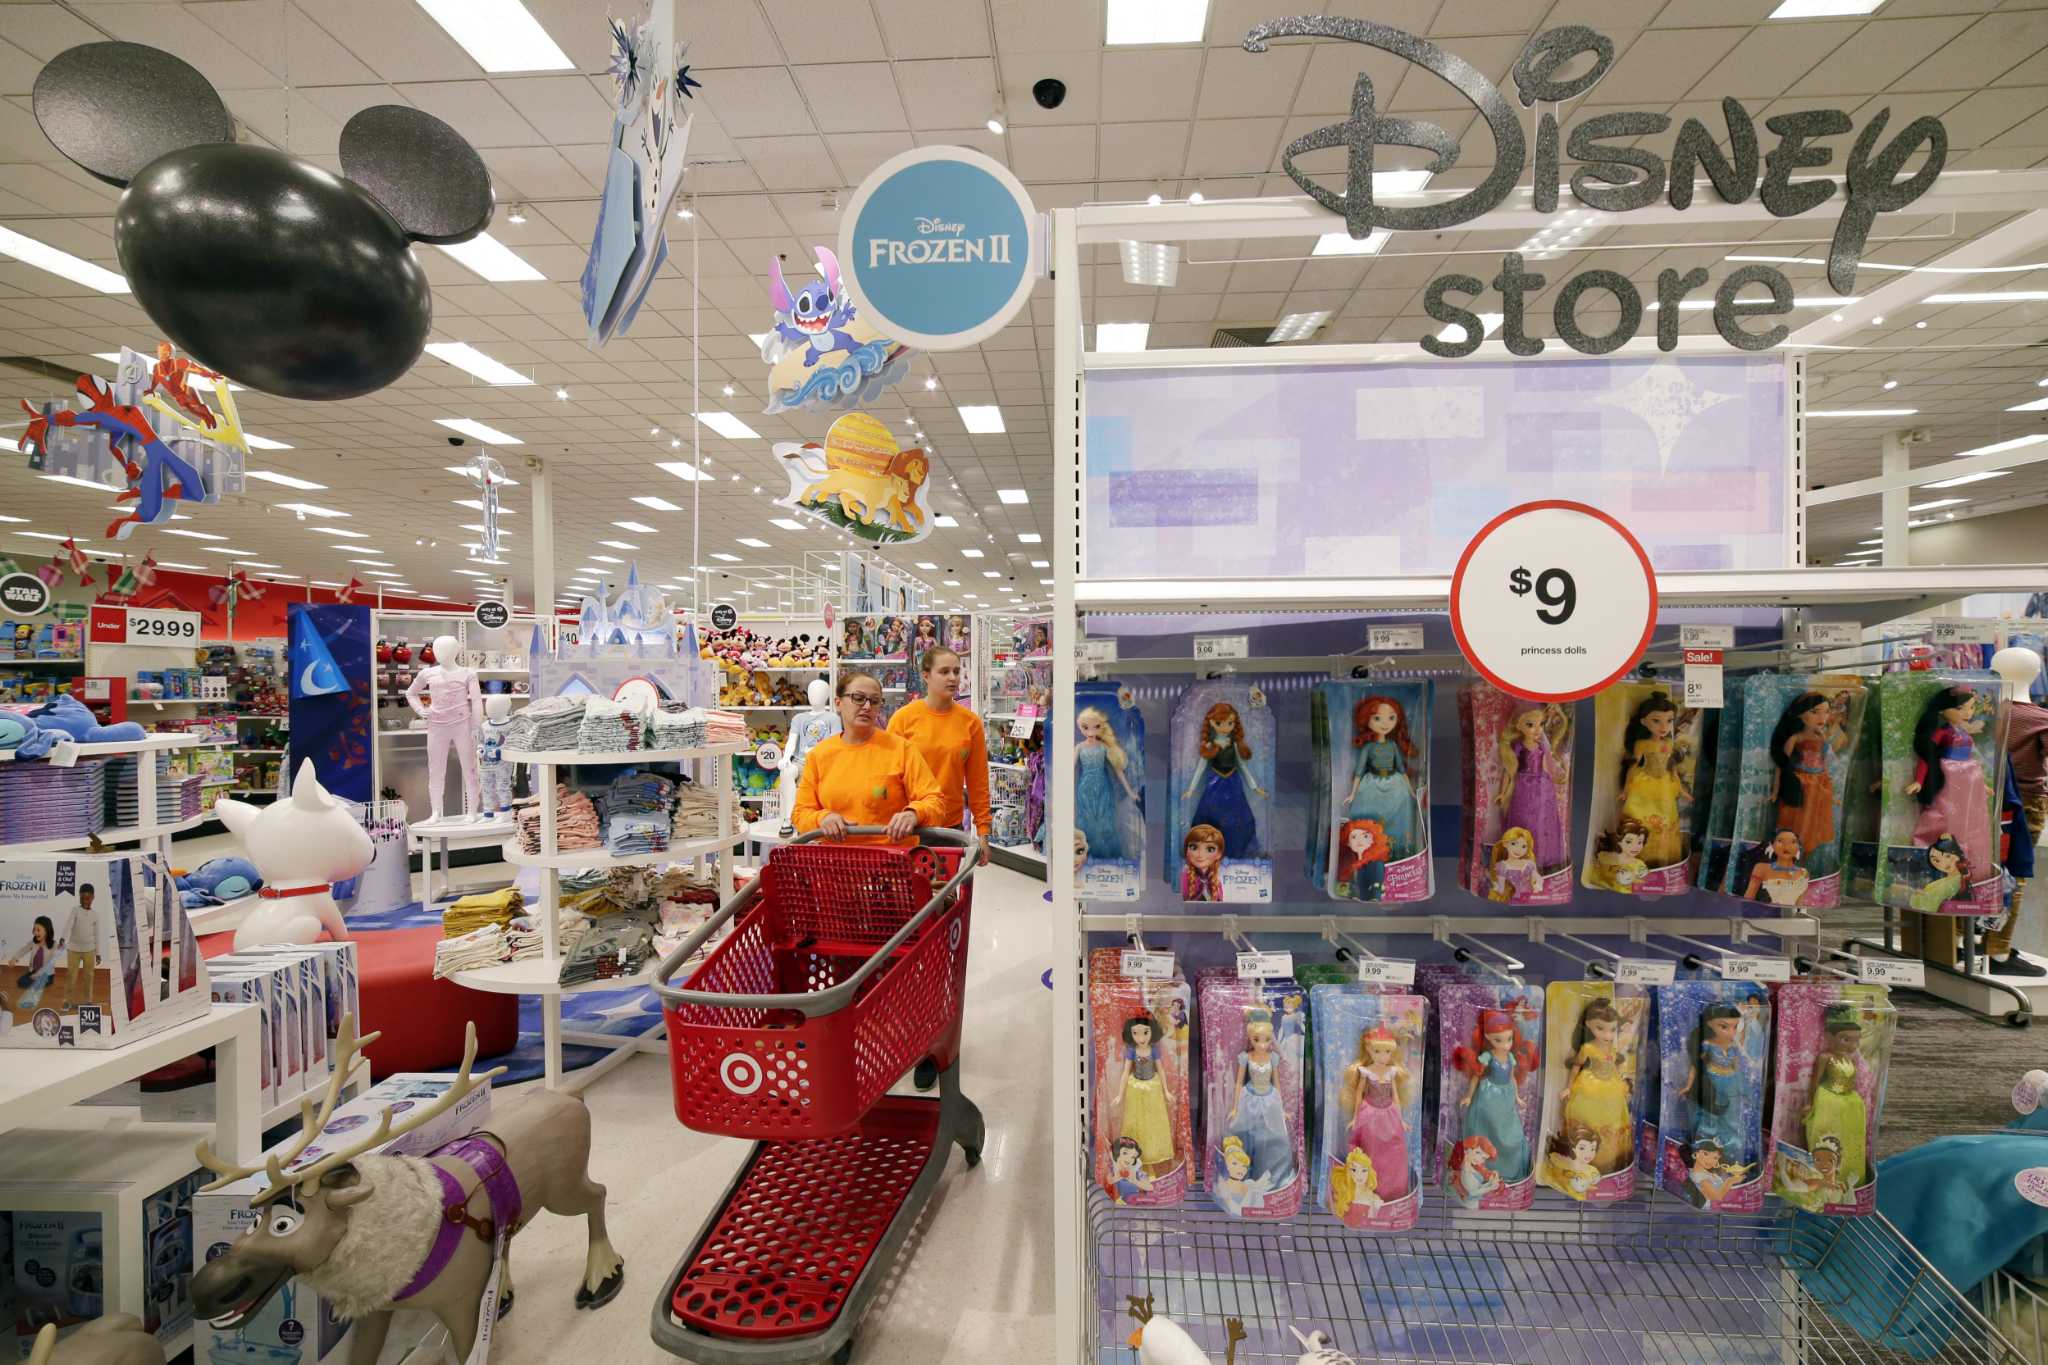 Disney Store Walkthrough at Galleria Mall in Houston, Texas - June